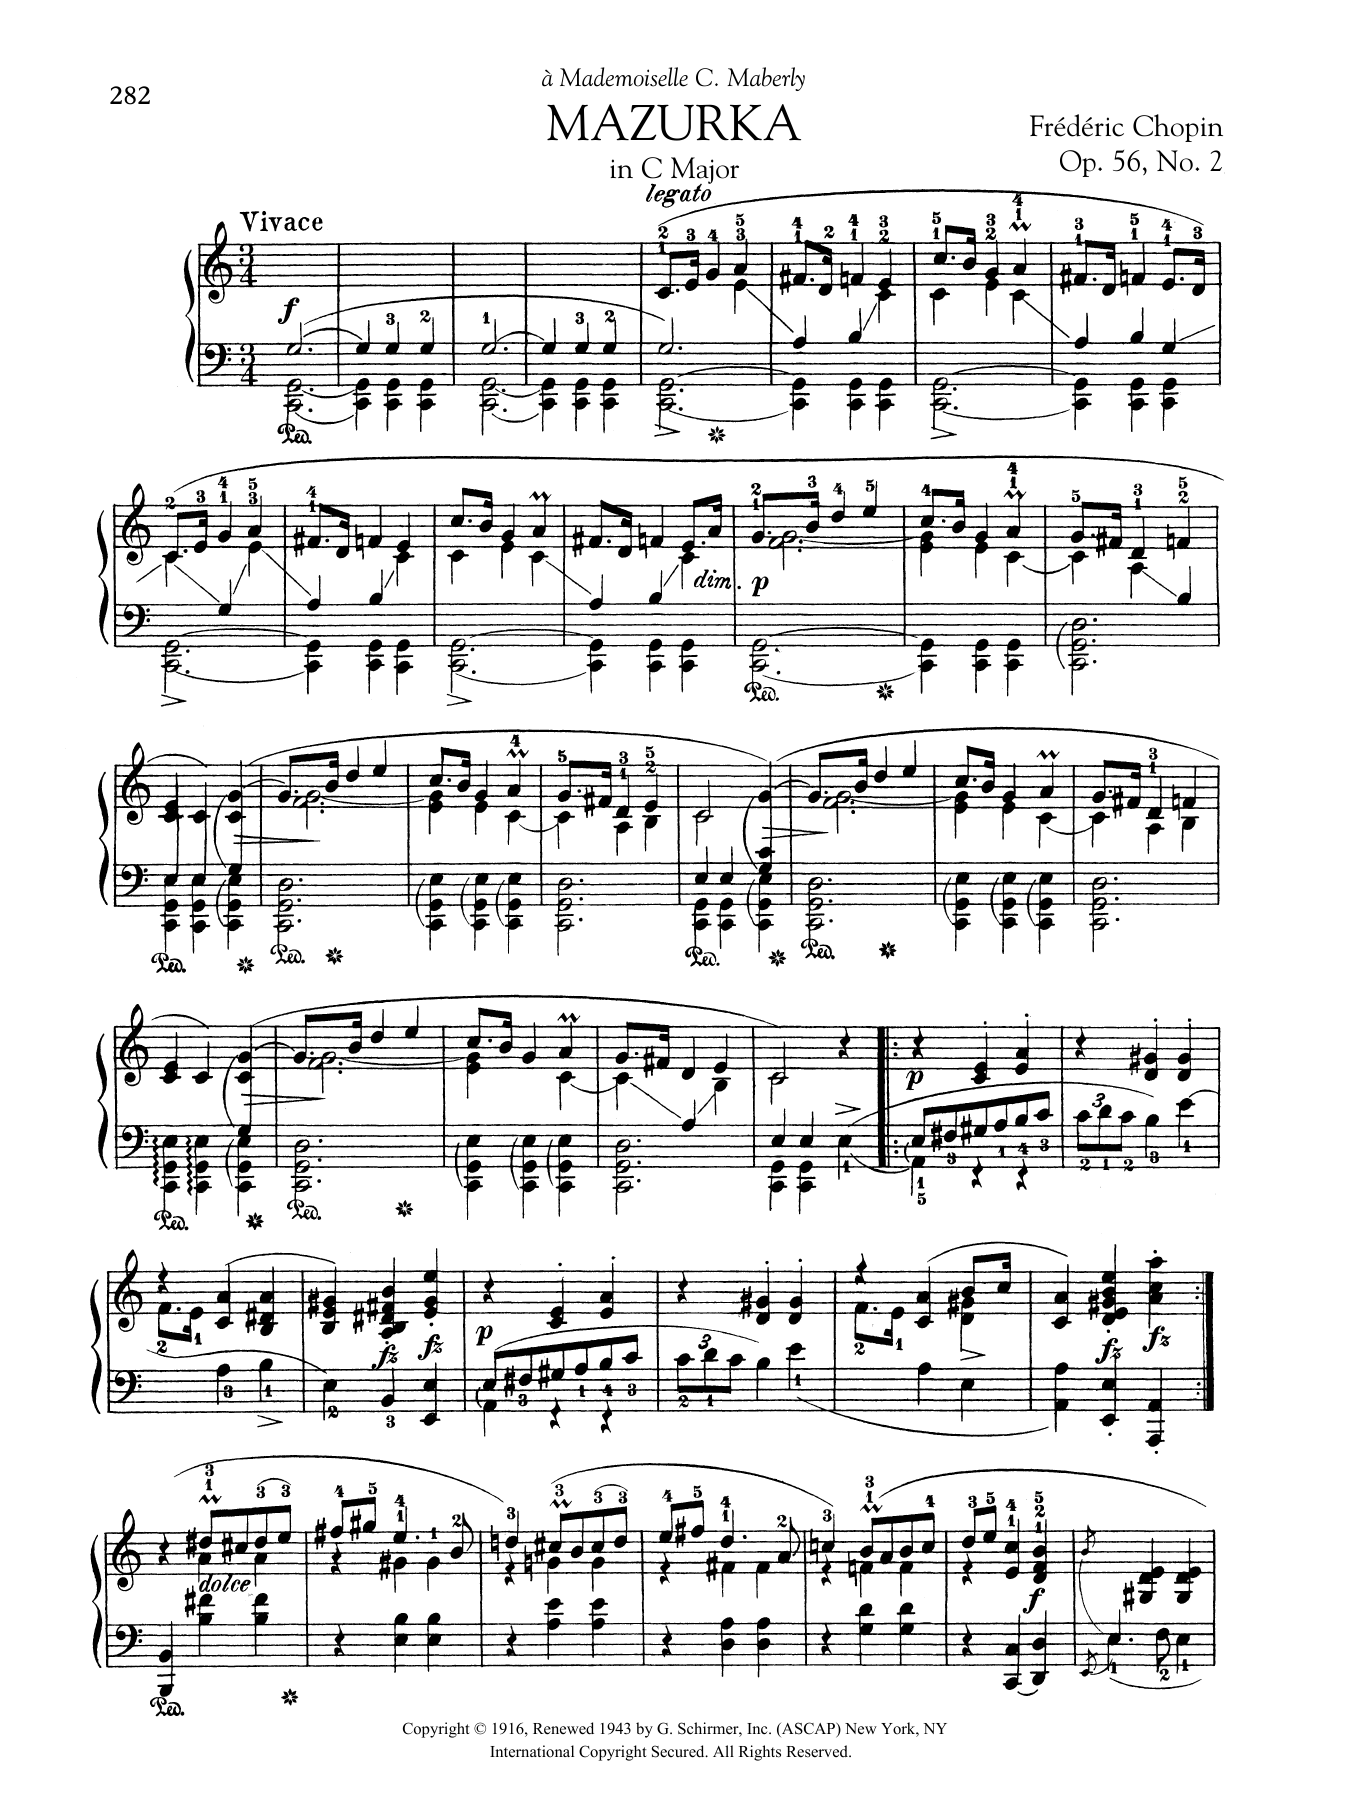 Download Frederic Chopin Mazurka in C Major, Op. 56, No. 2 Sheet Music